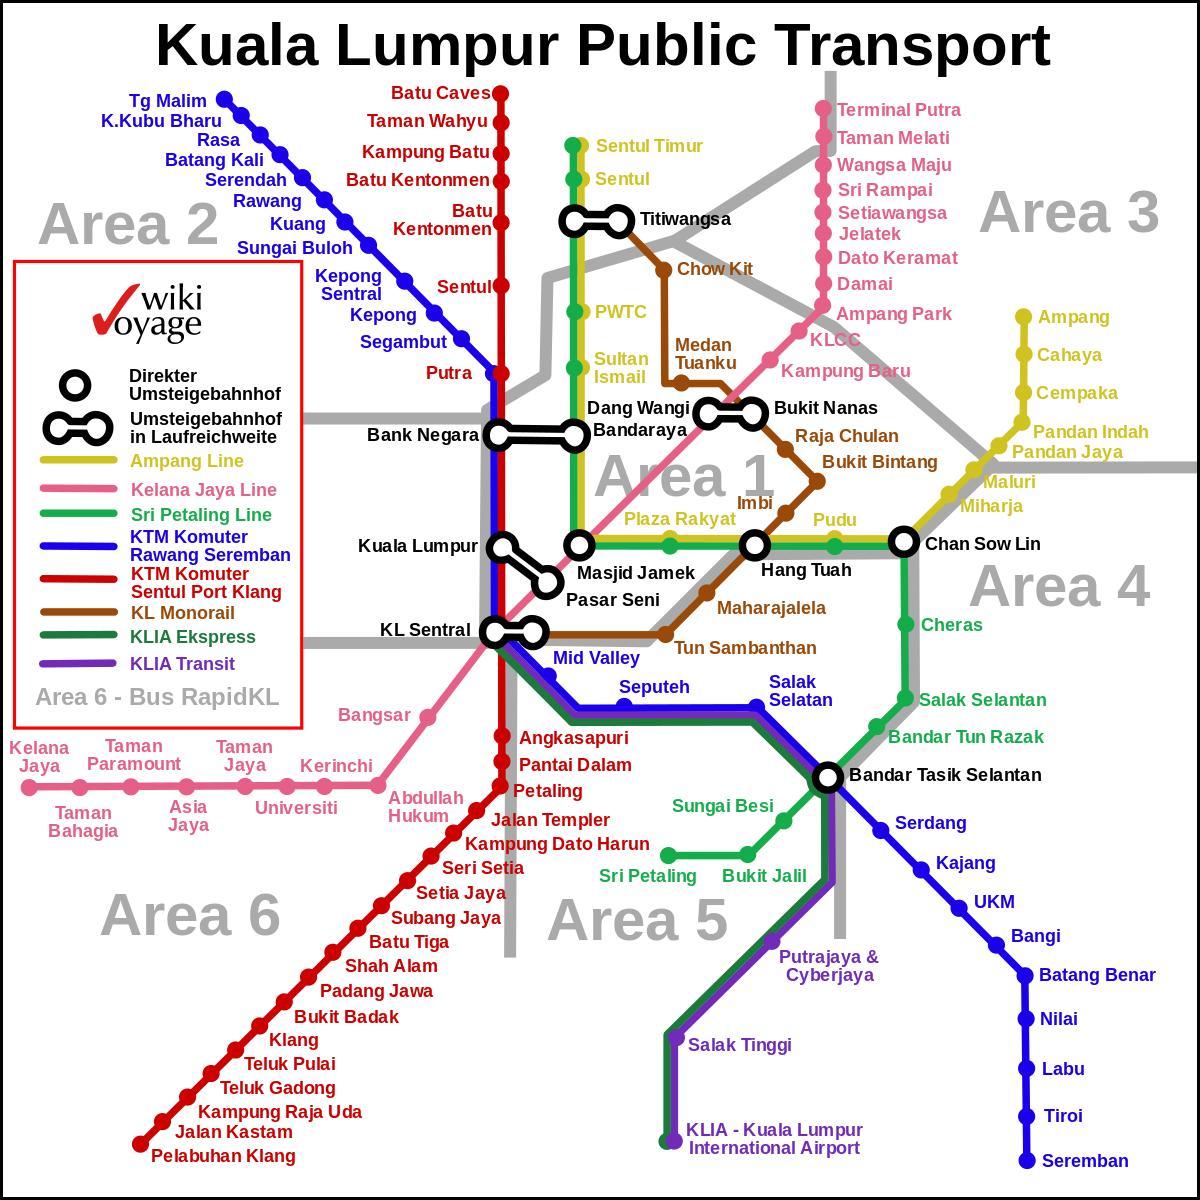 les transports publics kuala lumpur carte